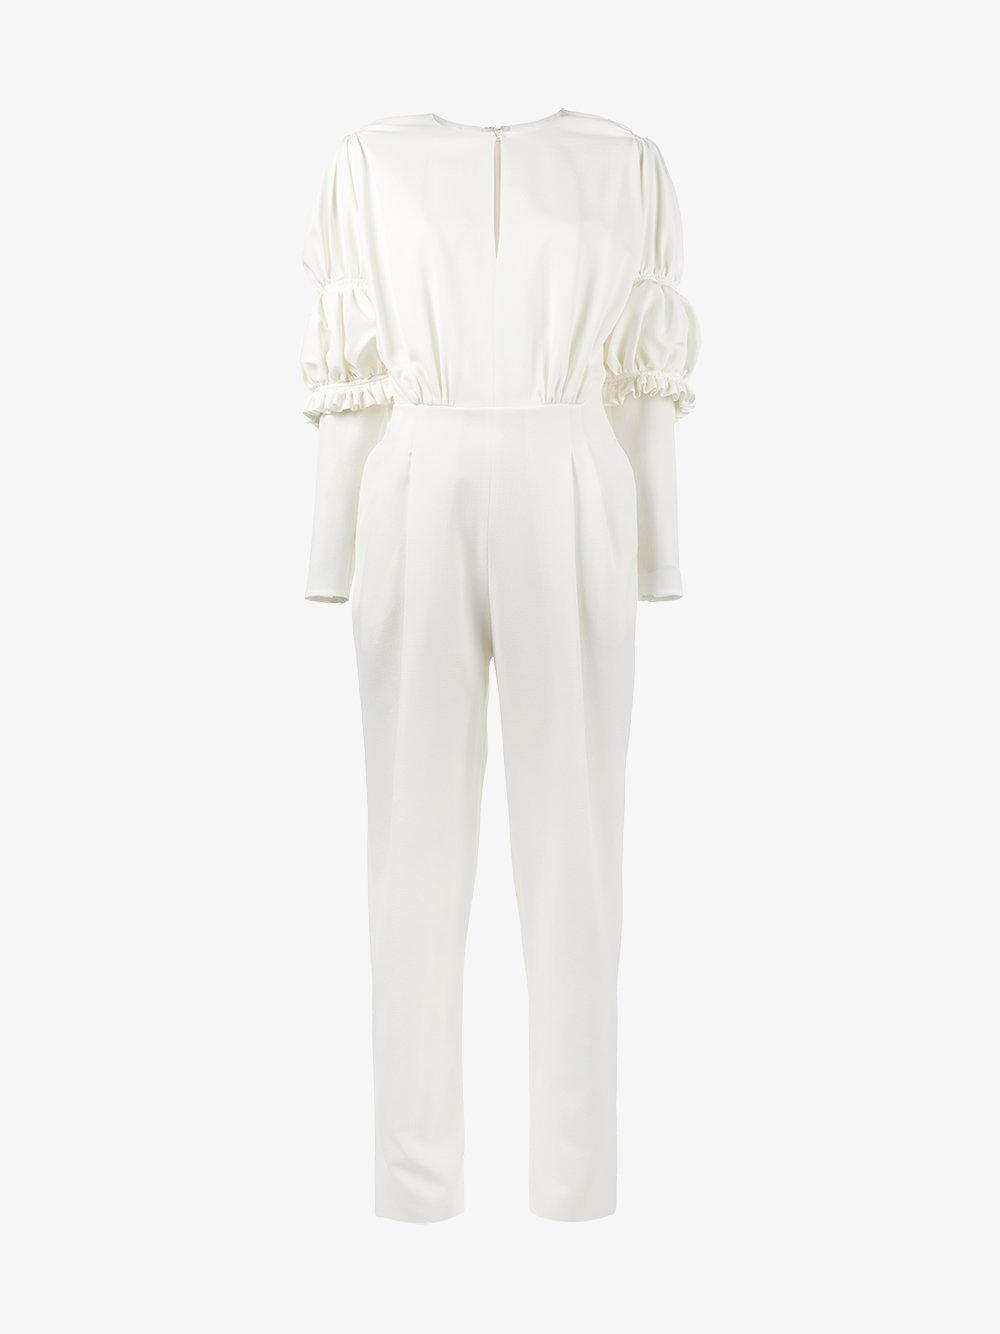 Emilia Wickstead Silk Barrett Jumpsuit in White - Lyst